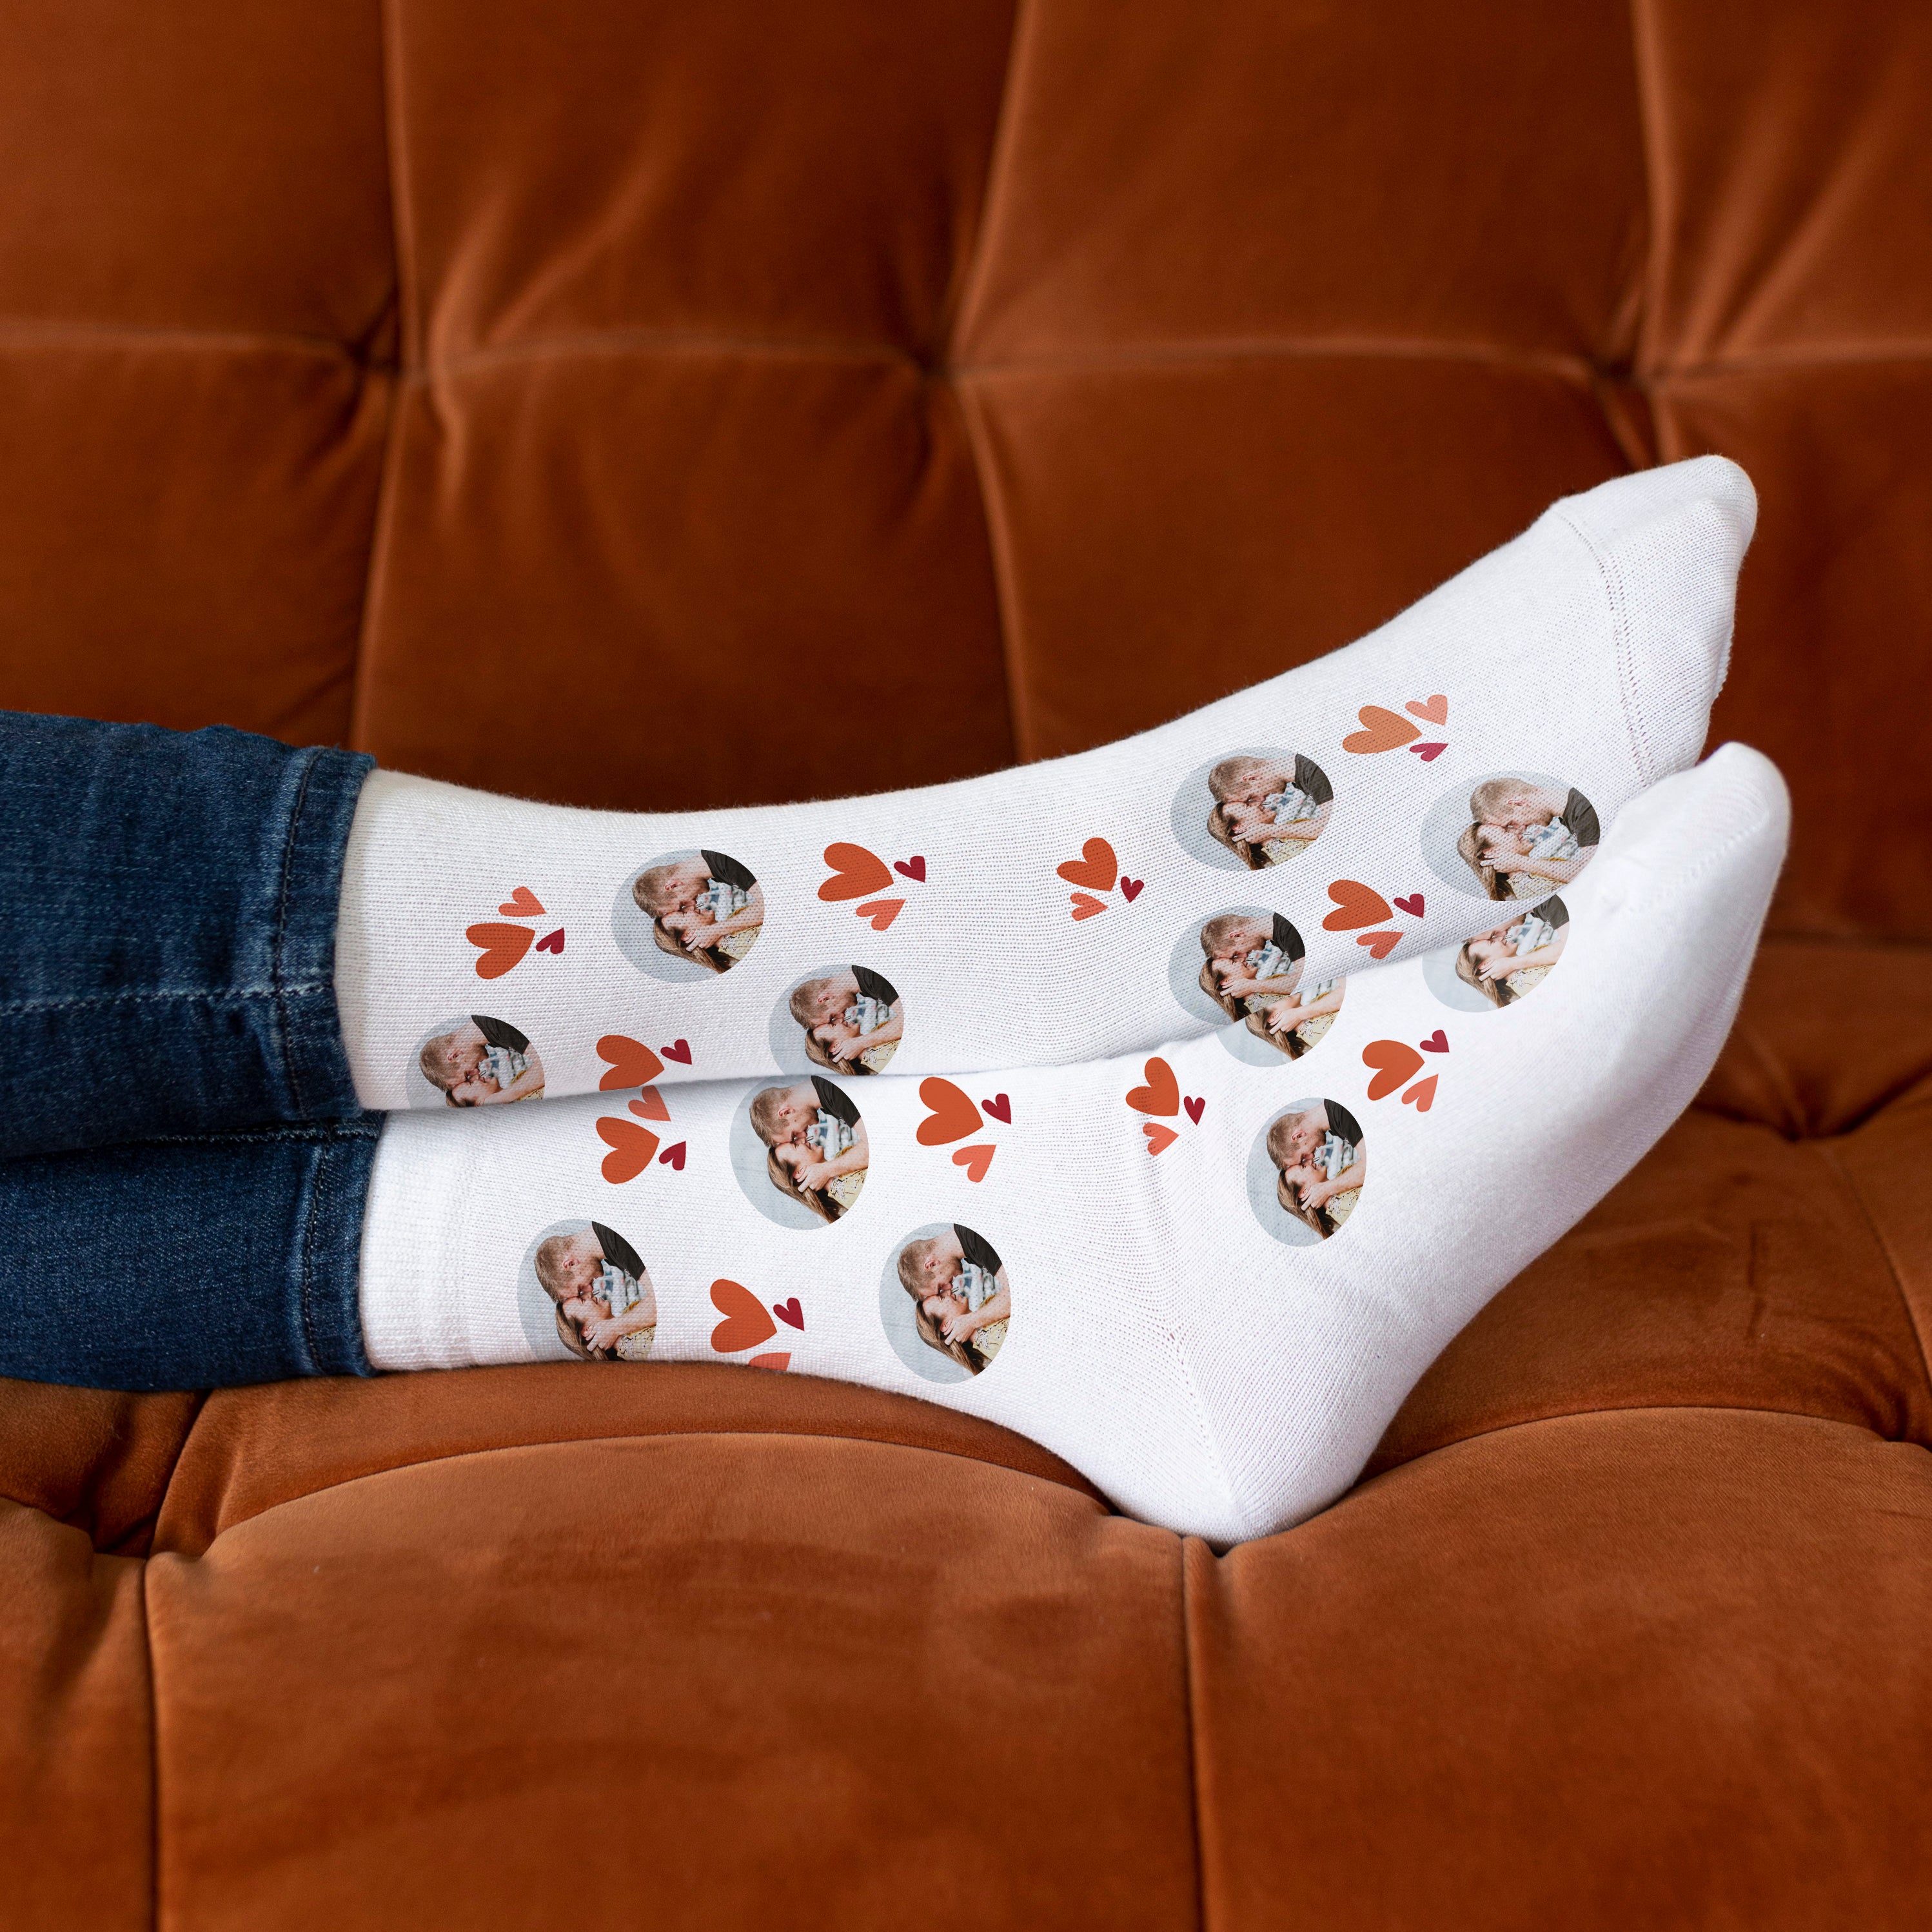 Socken bedrucken Größe 39 42  - Onlineshop YourSurprise